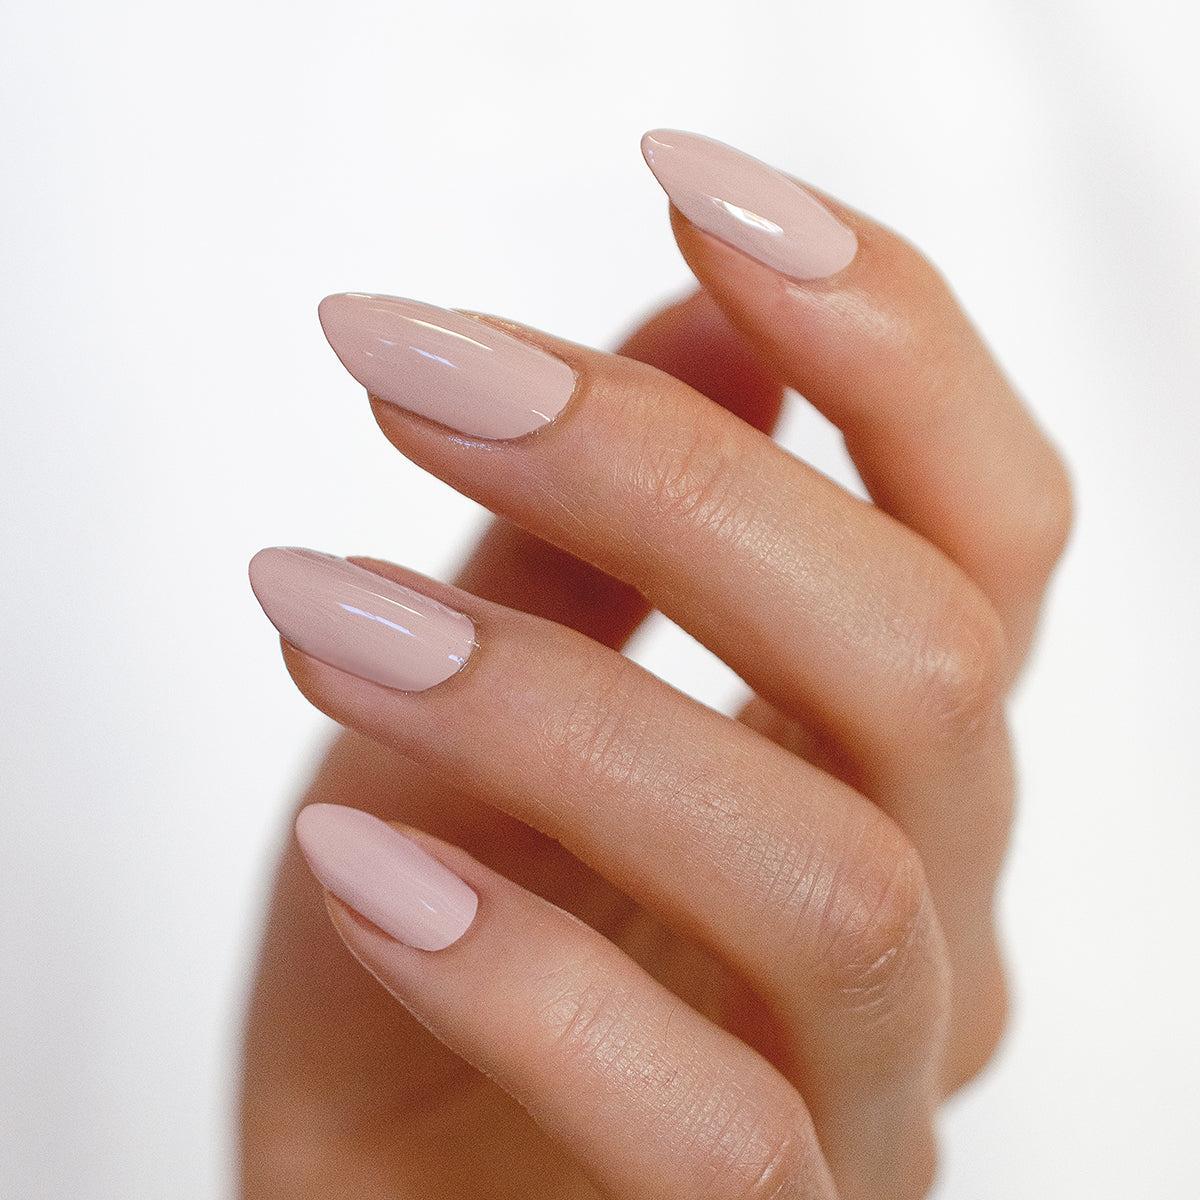 almond shape nails with nude nail polish